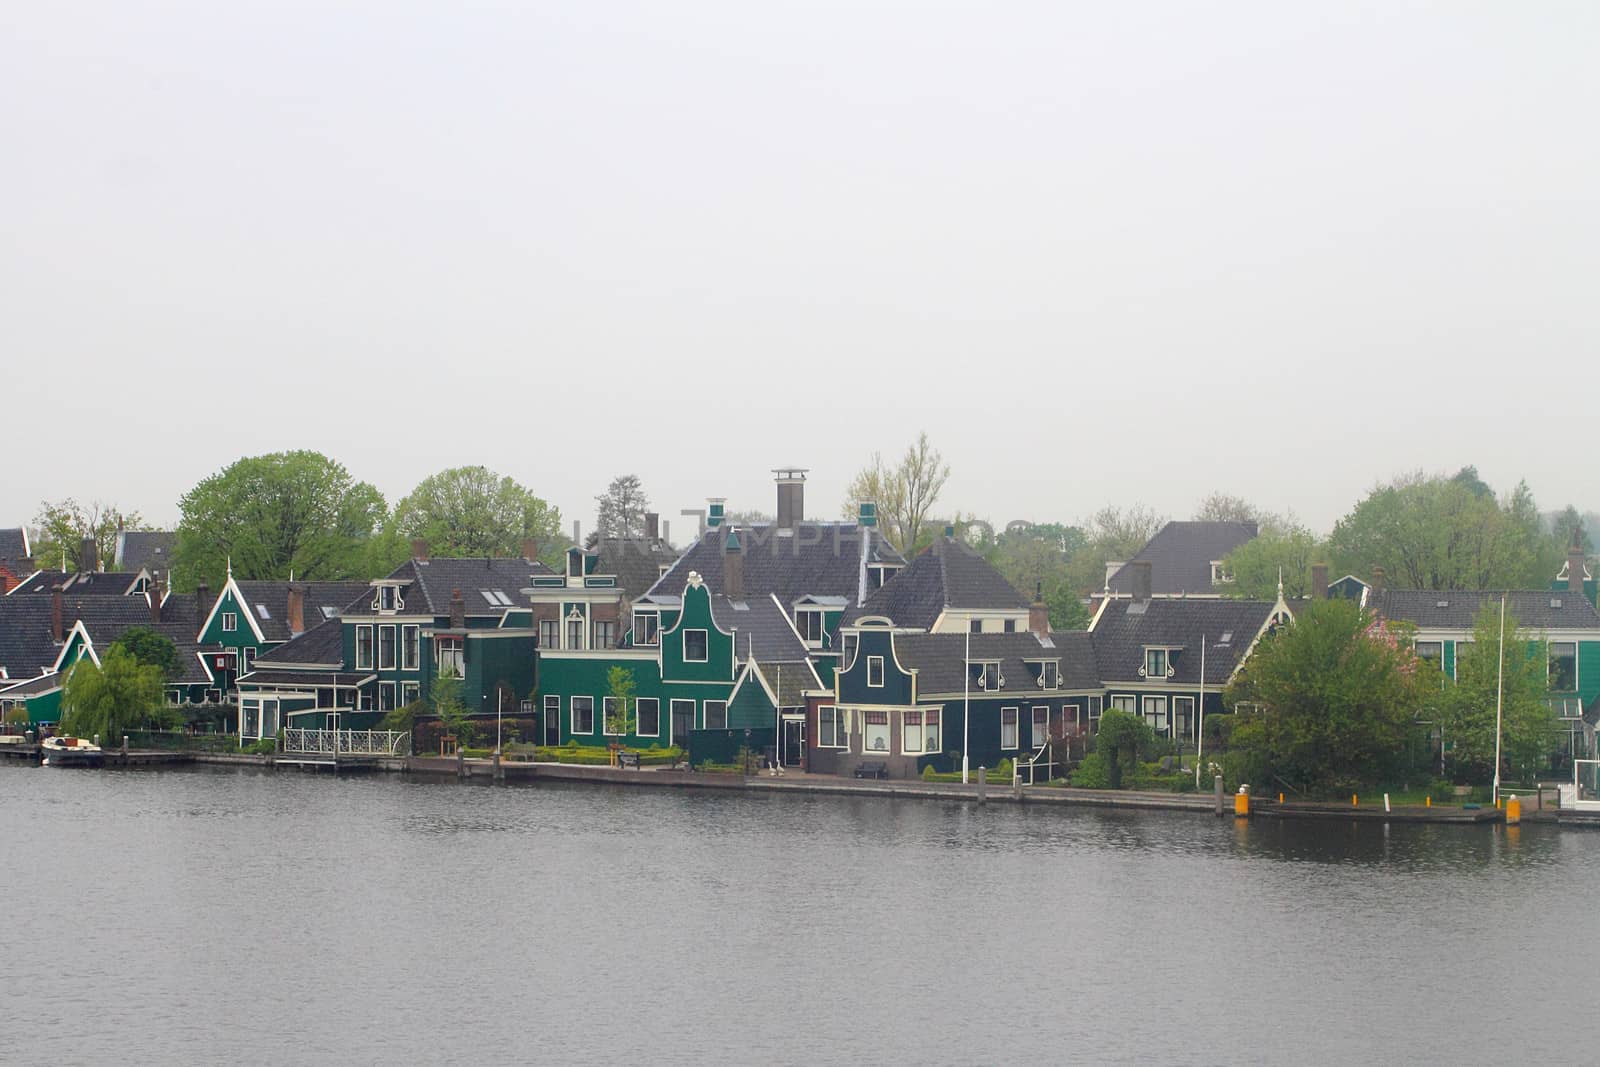 Houses in Zaanse Schans, Netherlands by Rossella